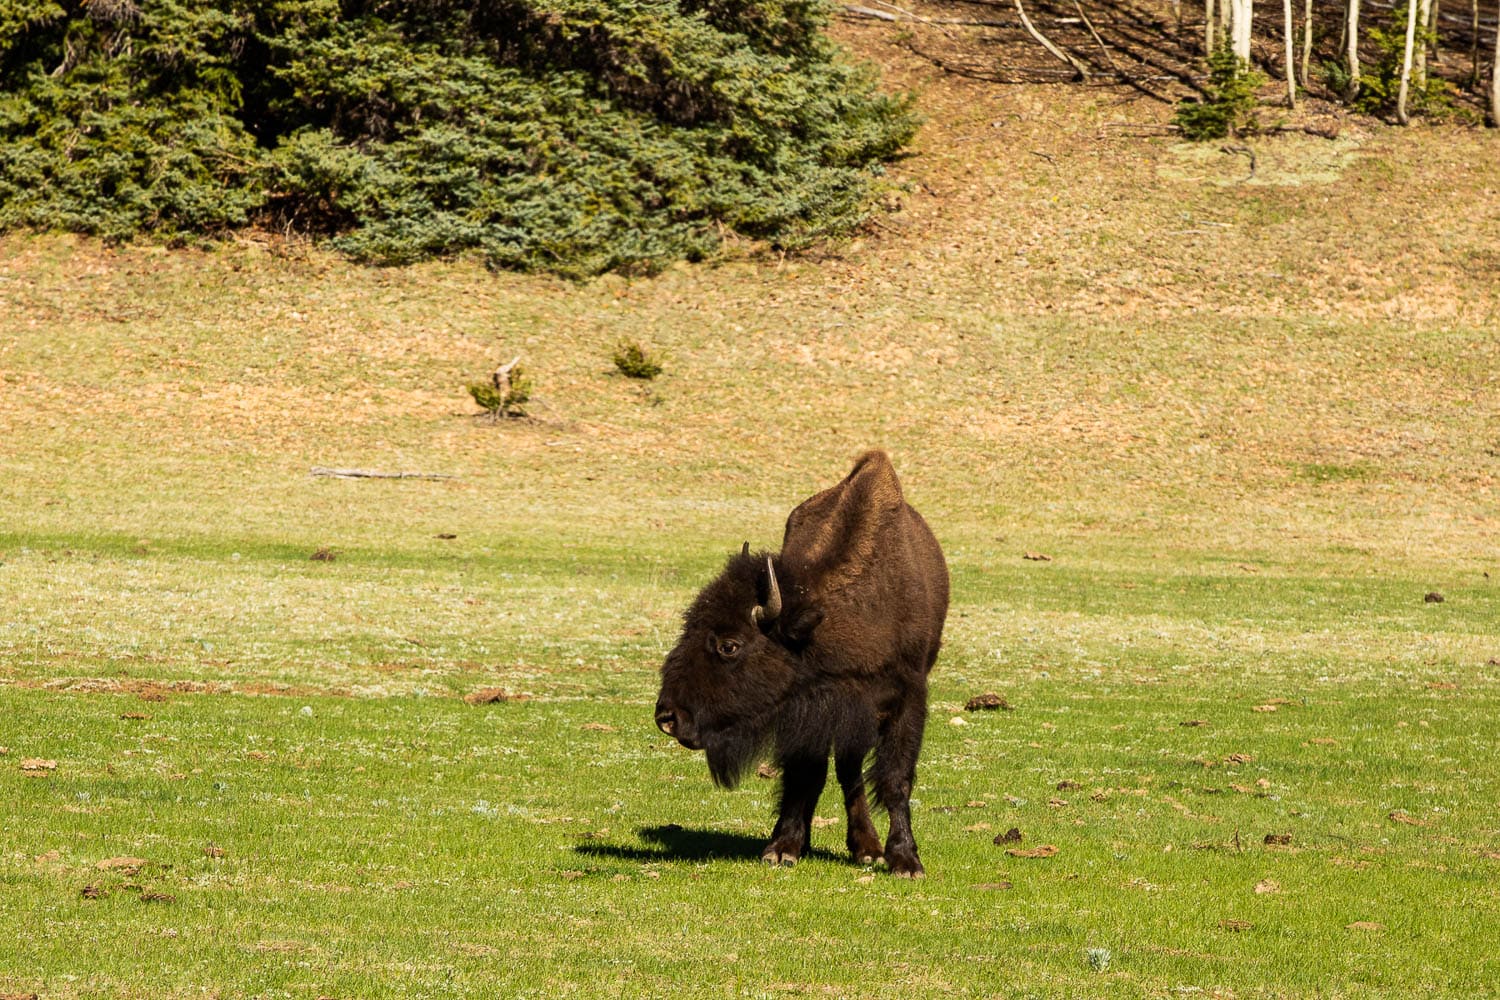 A bison swings its head on a grass field in Arizona.